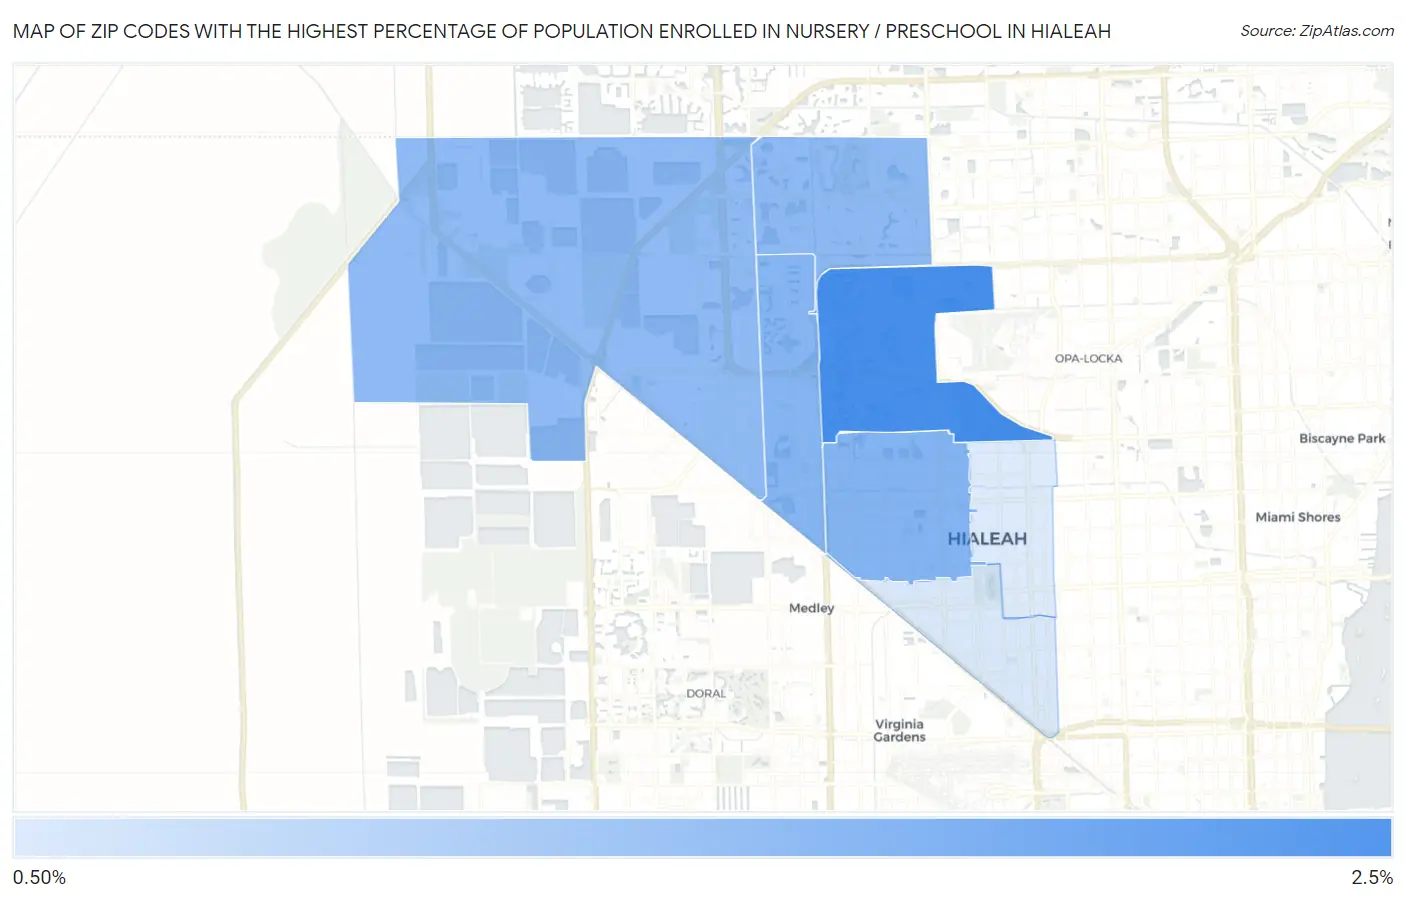 Zip Codes with the Highest Percentage of Population Enrolled in Nursery / Preschool in Hialeah Map